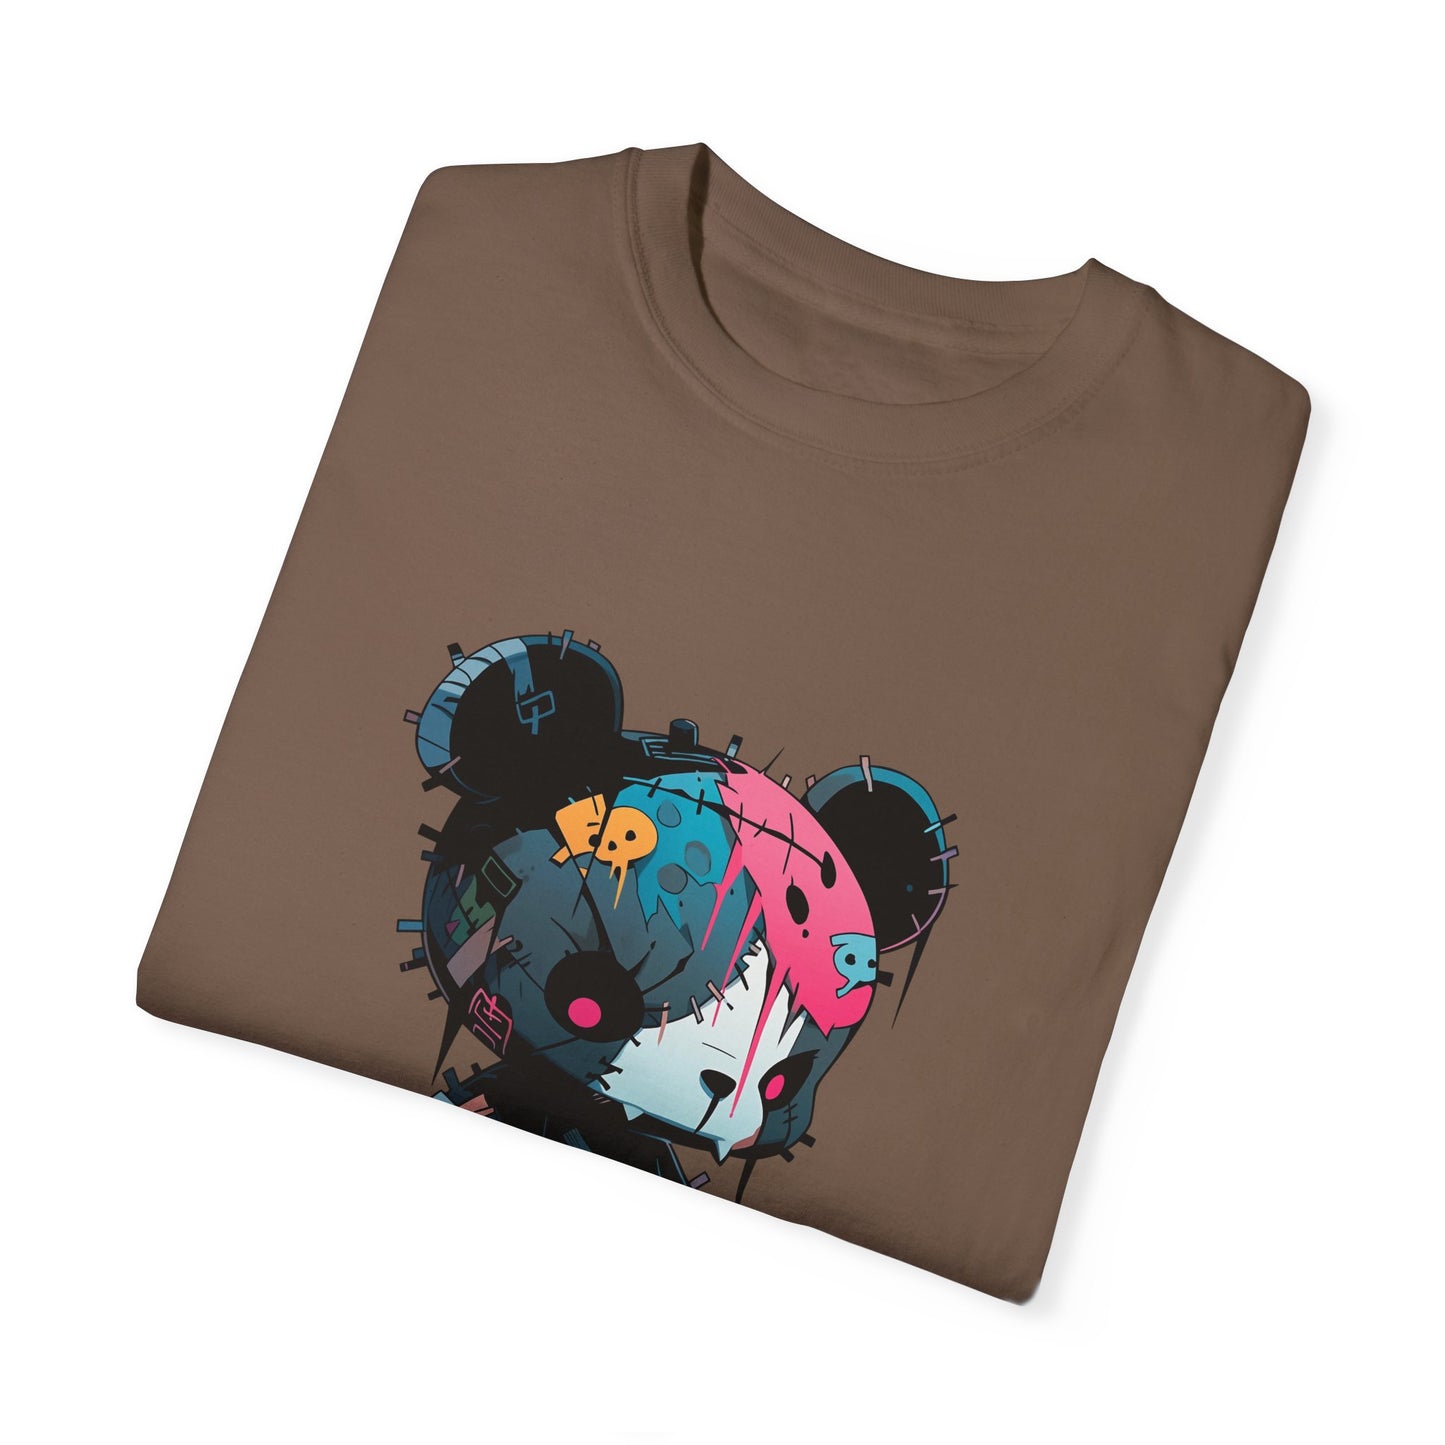 Hip Hop Teddy Bear Graphic Unisex Garment-dyed T-shirt Cotton Funny Humorous Graphic Soft Premium Unisex Men Women Espresso T-shirt Birthday Gift-59